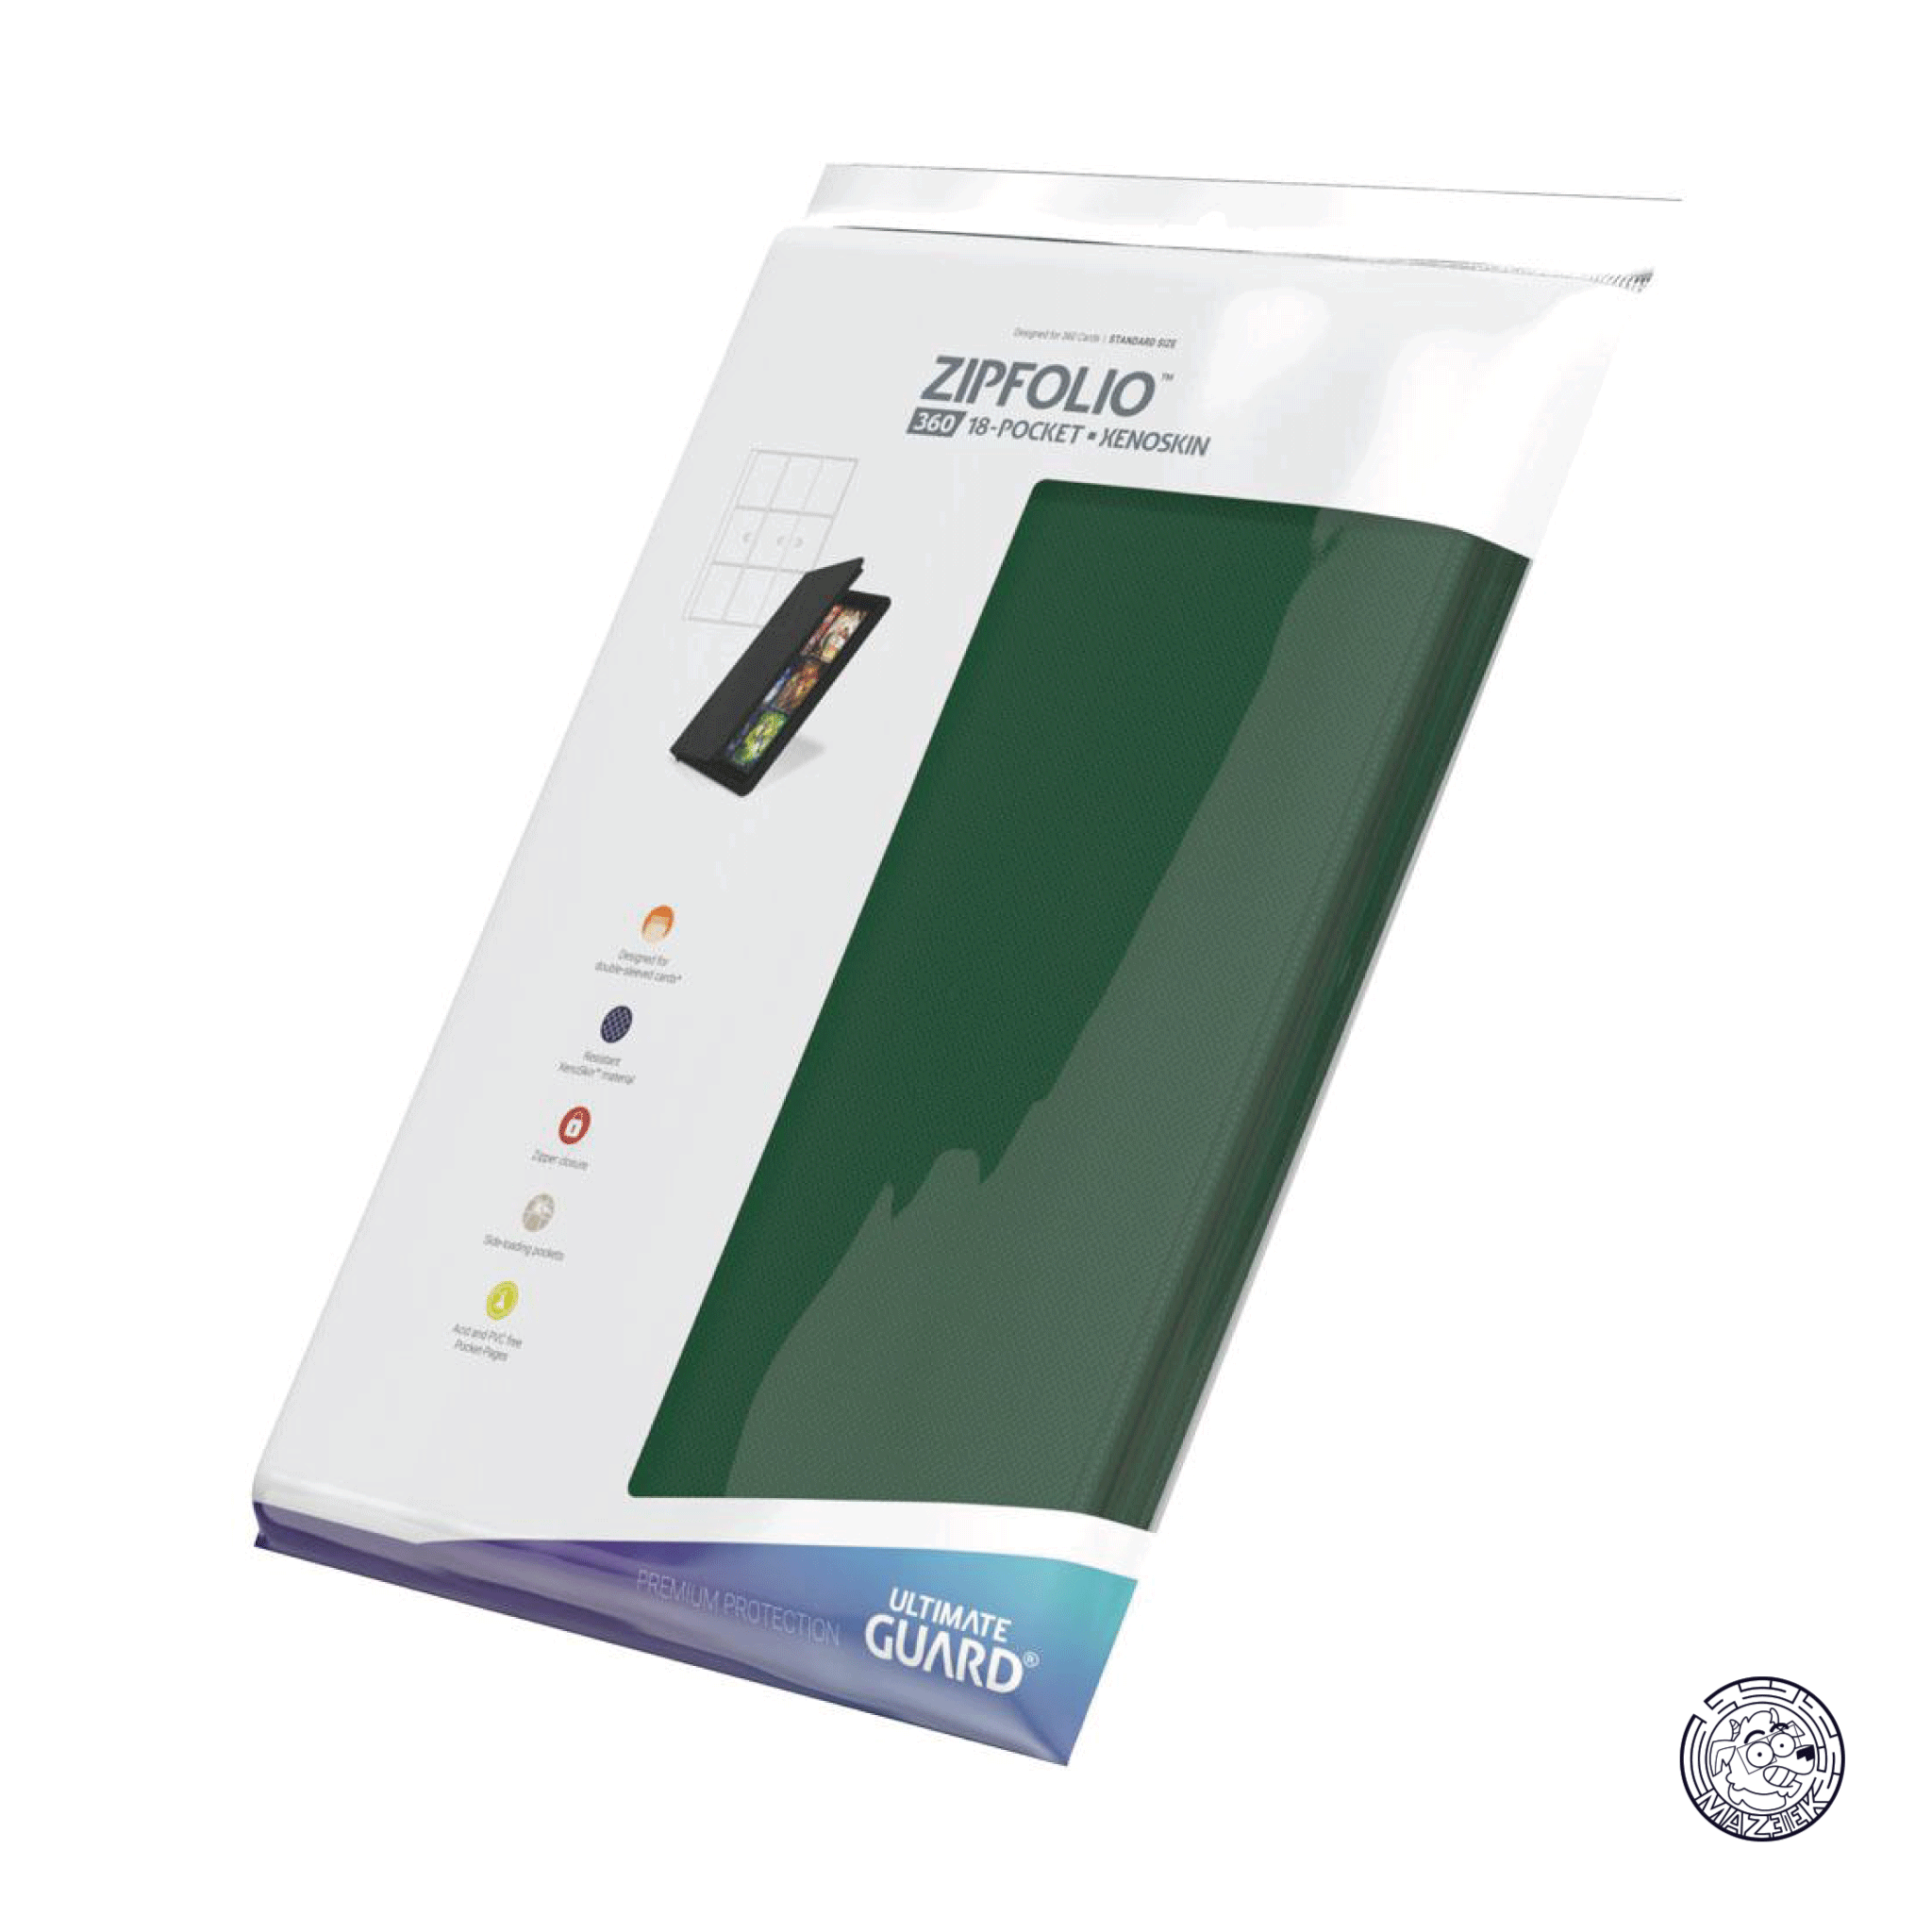 Ultimate Guard - Zipfolio 360 - 18-Pocket XenoSkin (Green)